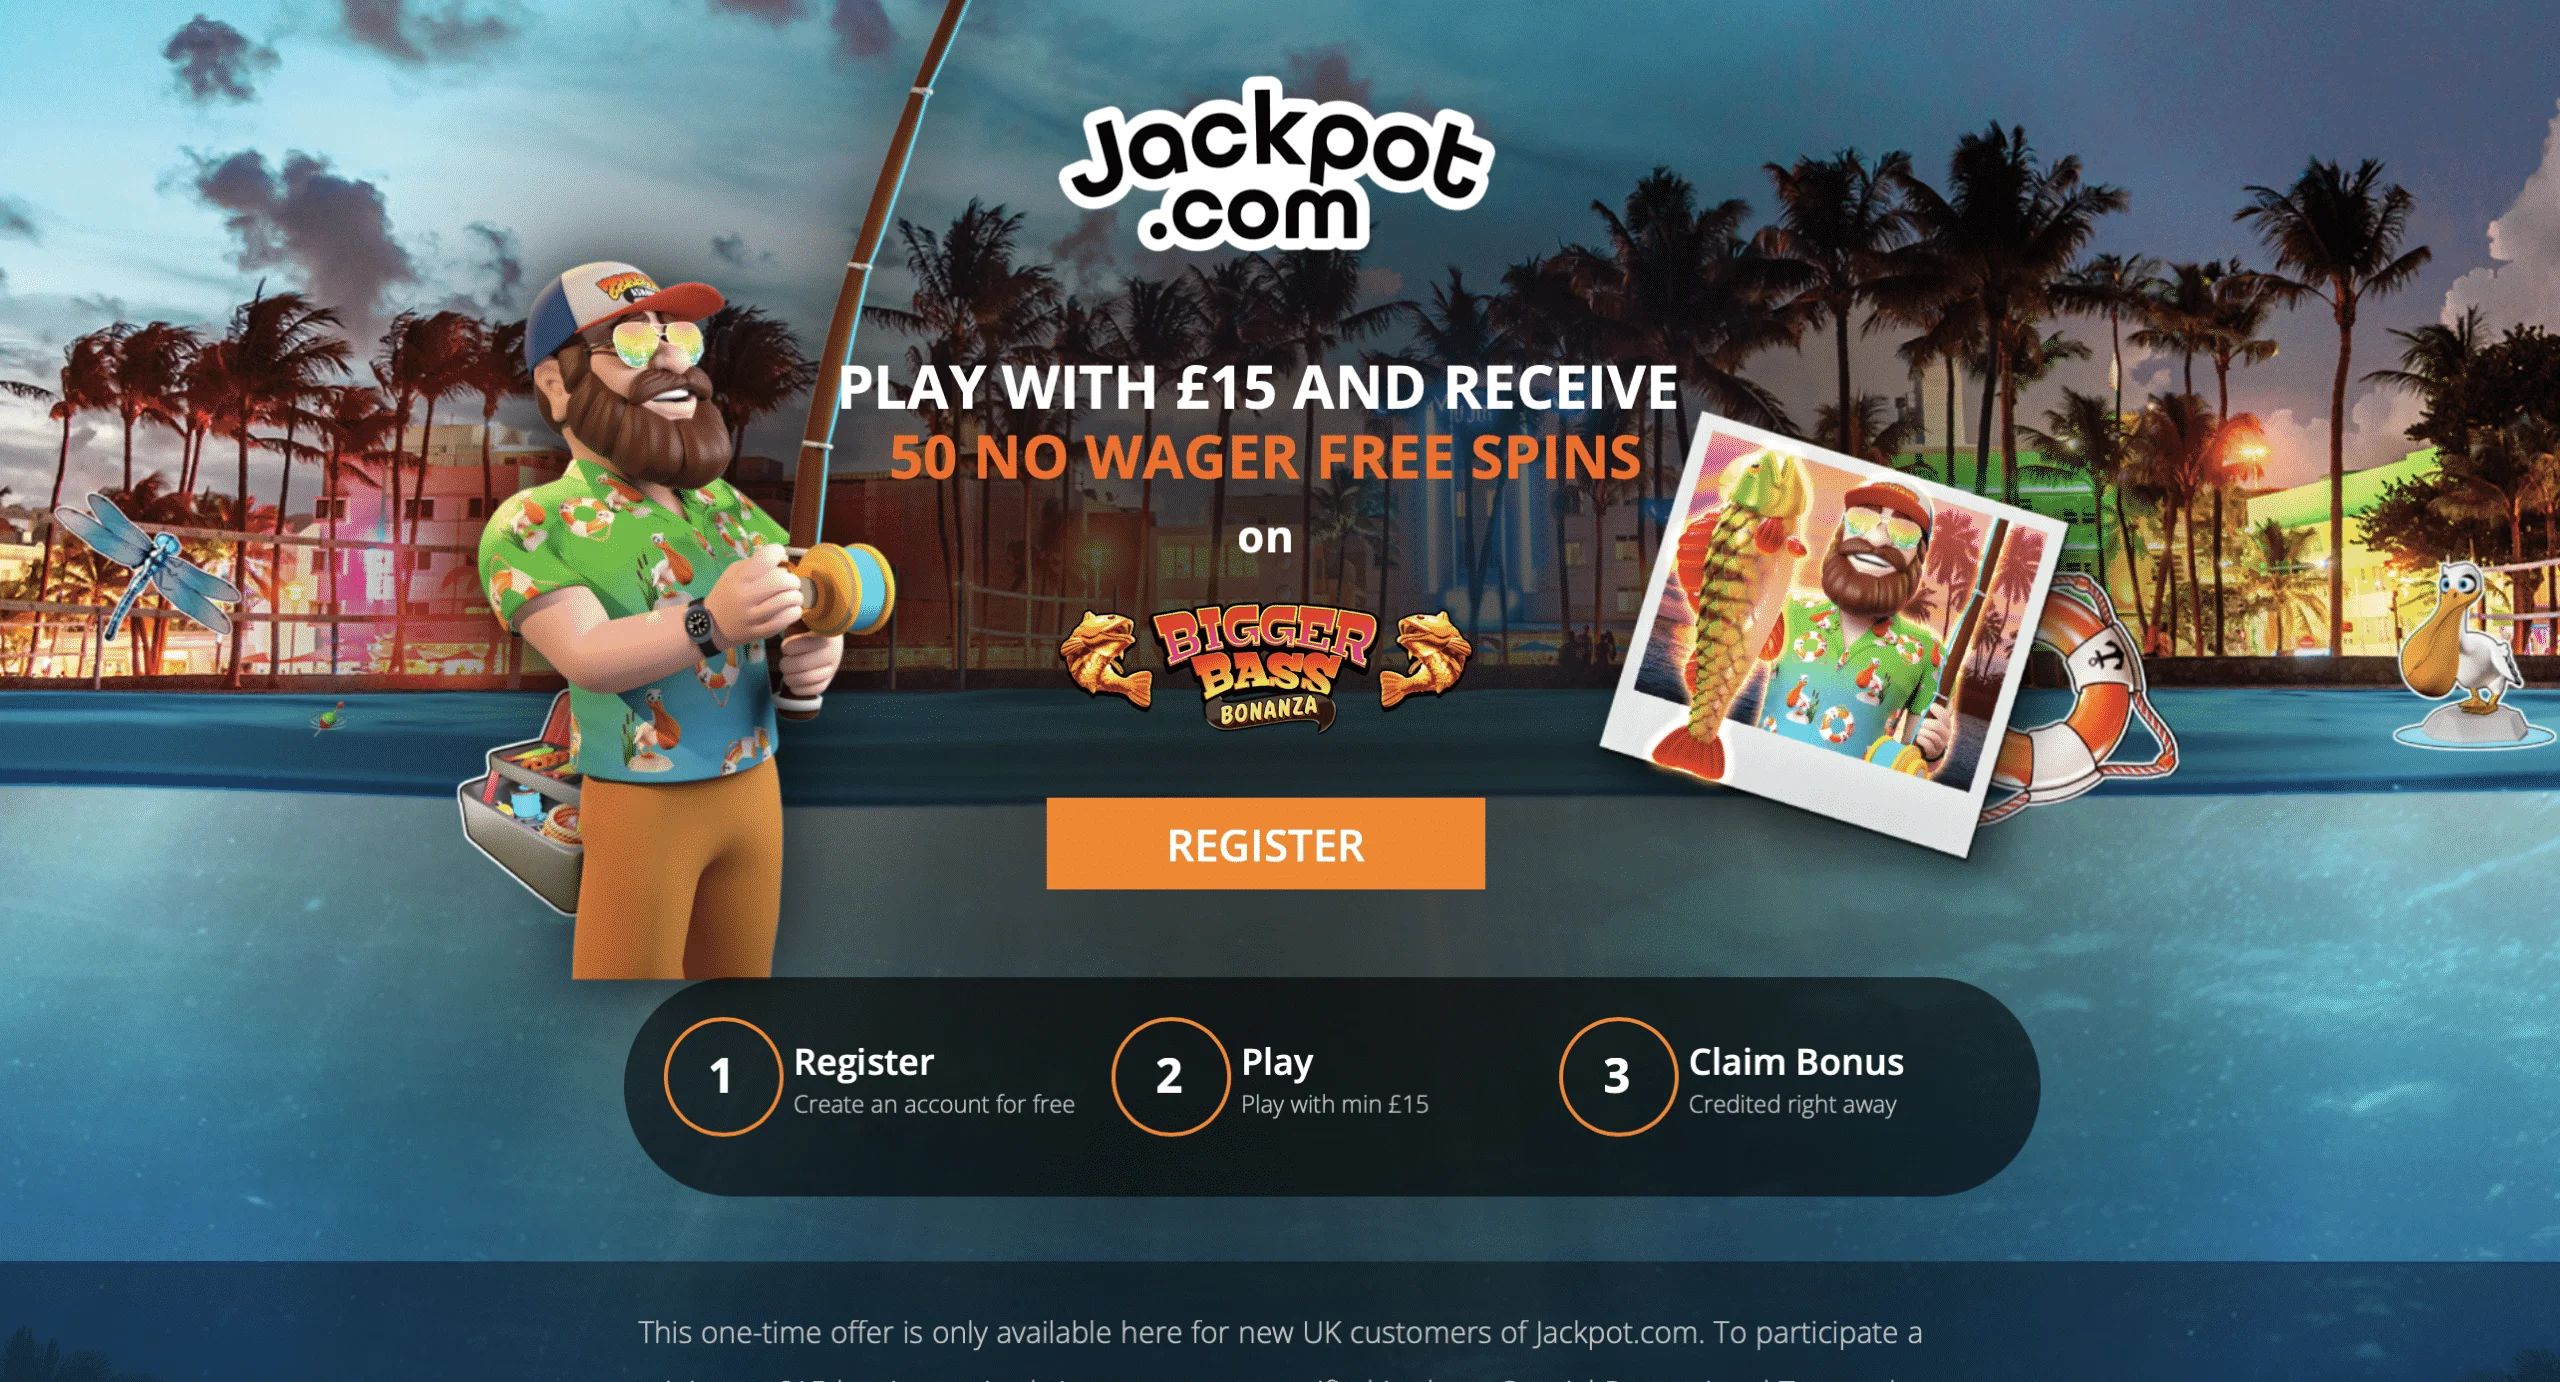 Jackpot.com Welcome Offer